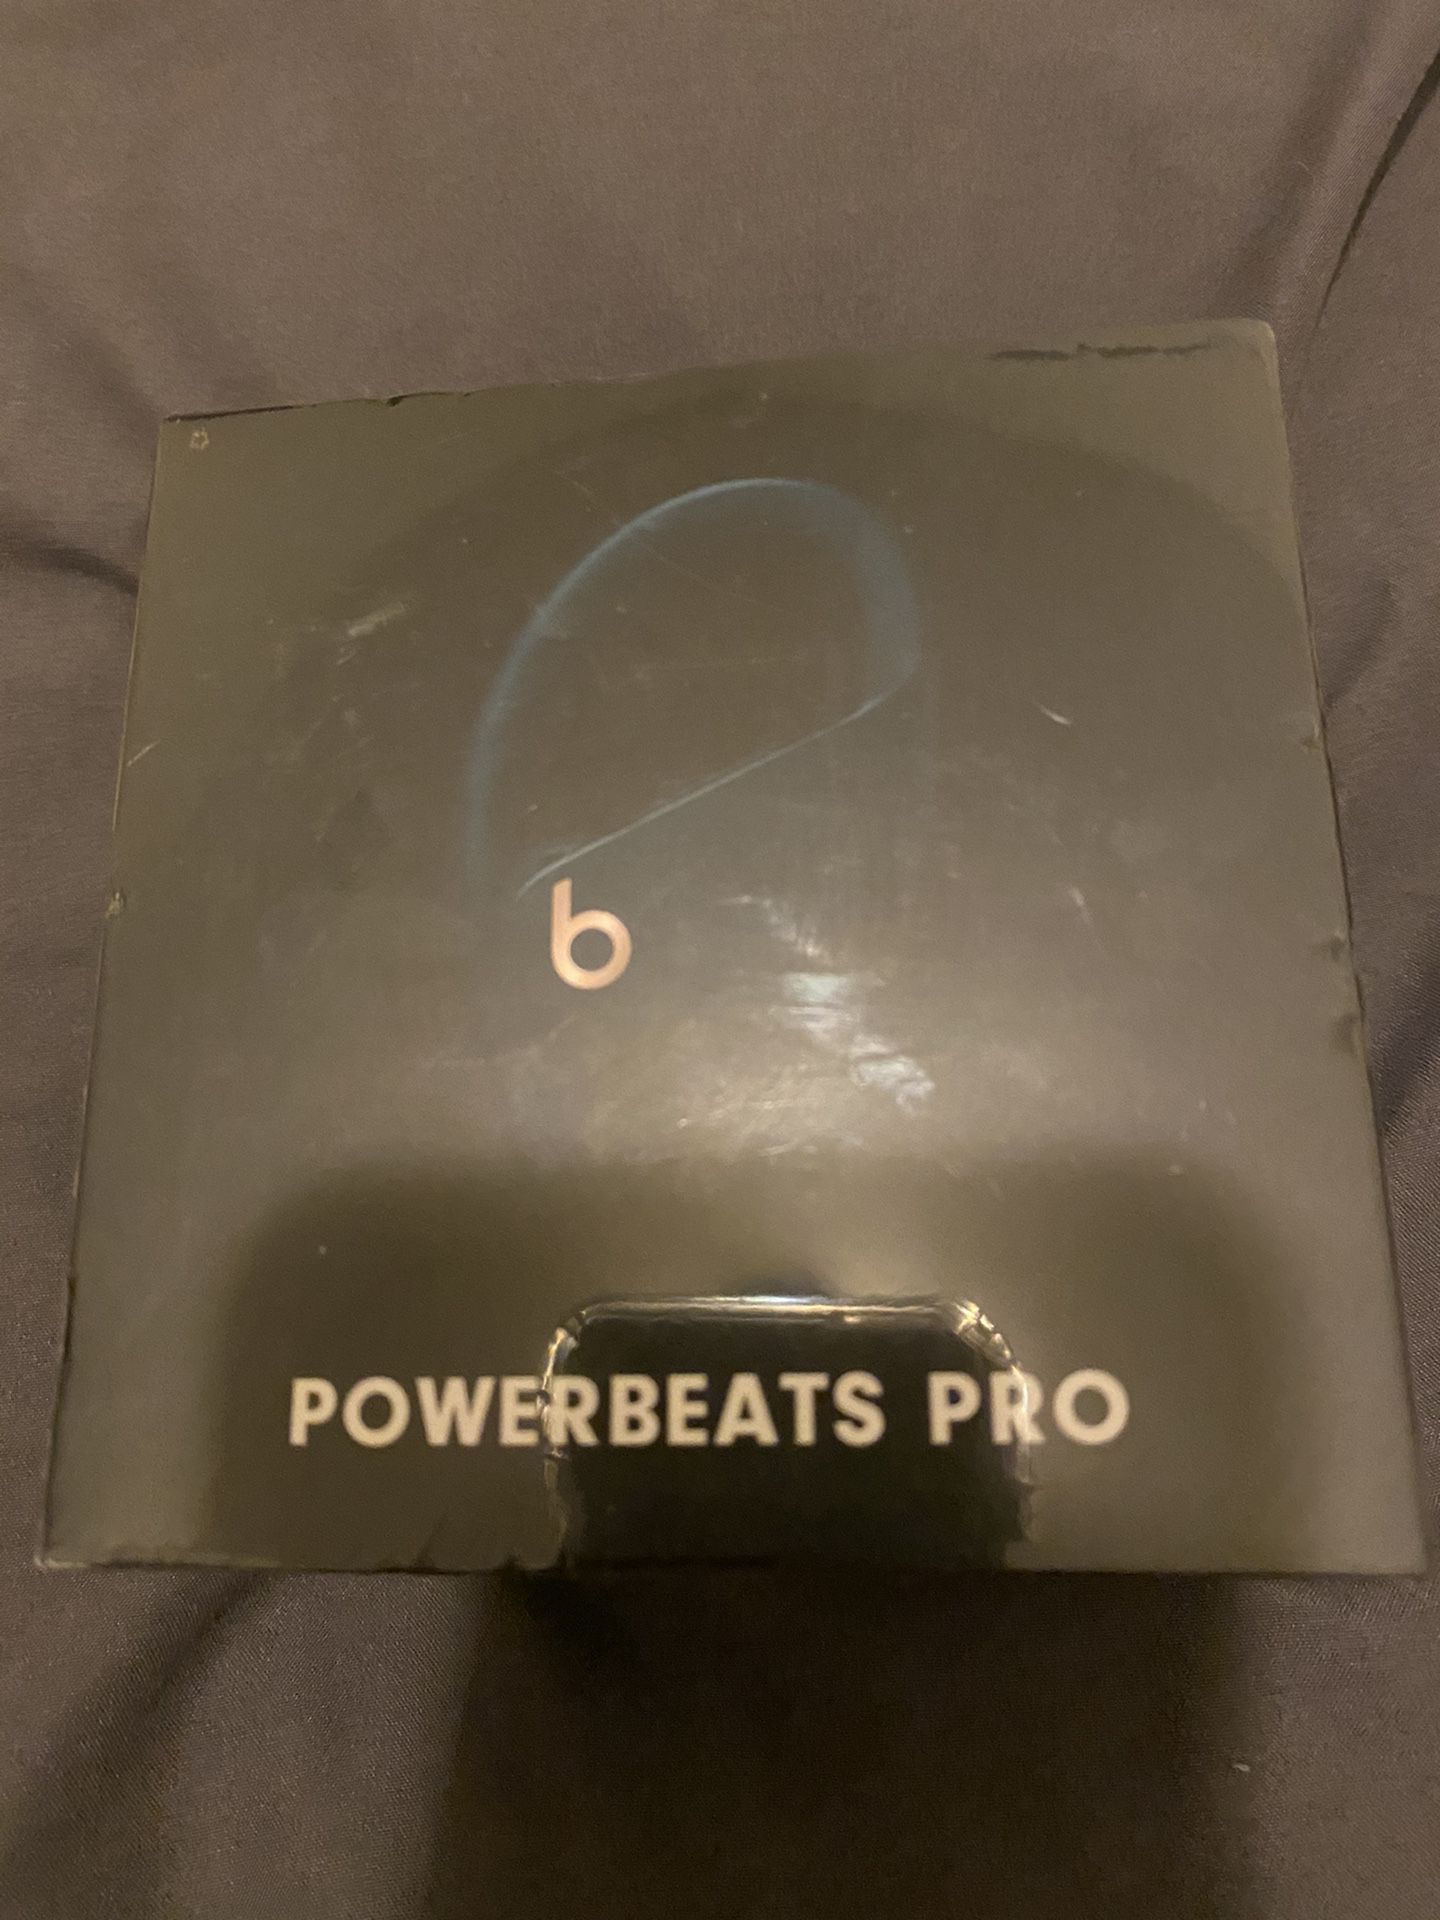 Powerbeats pro new headset